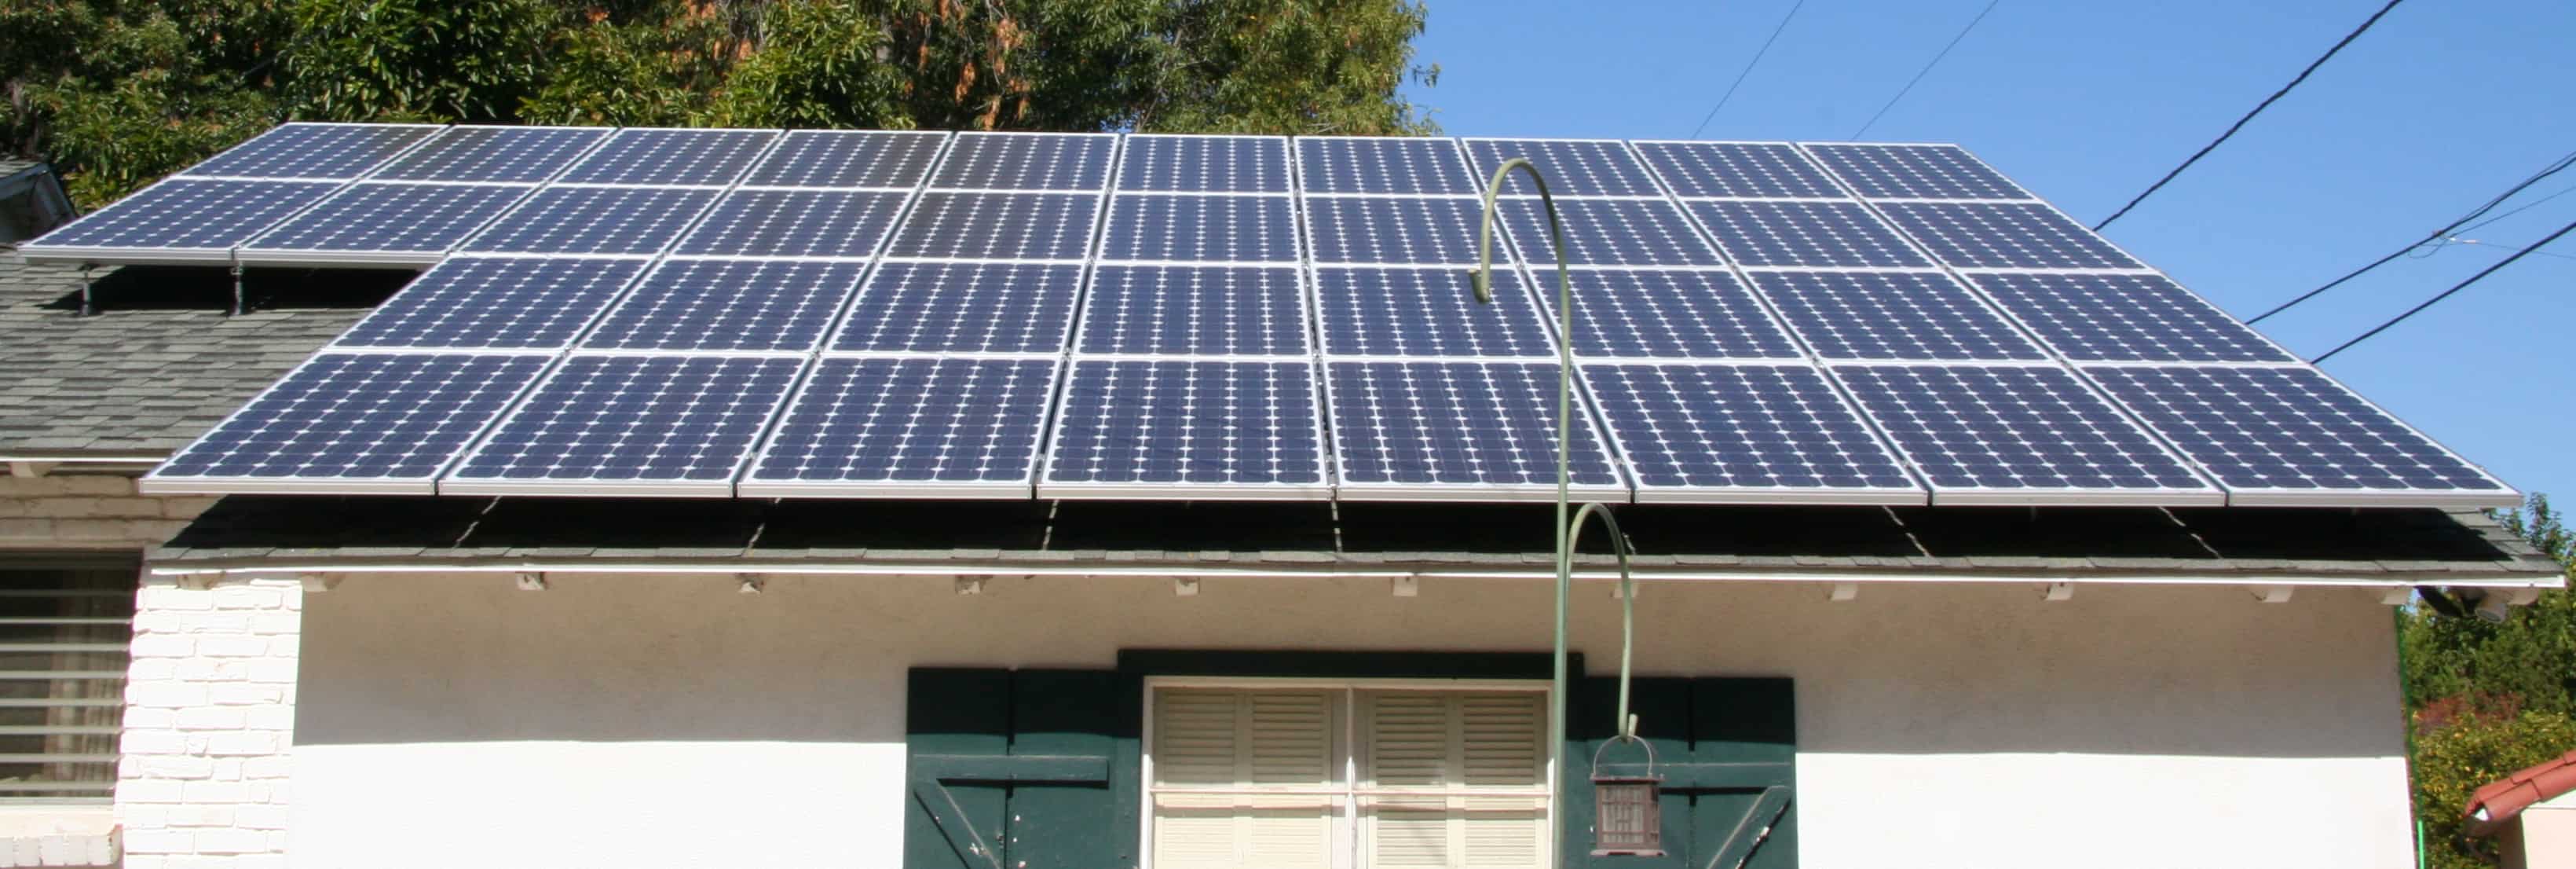 california home solar panels